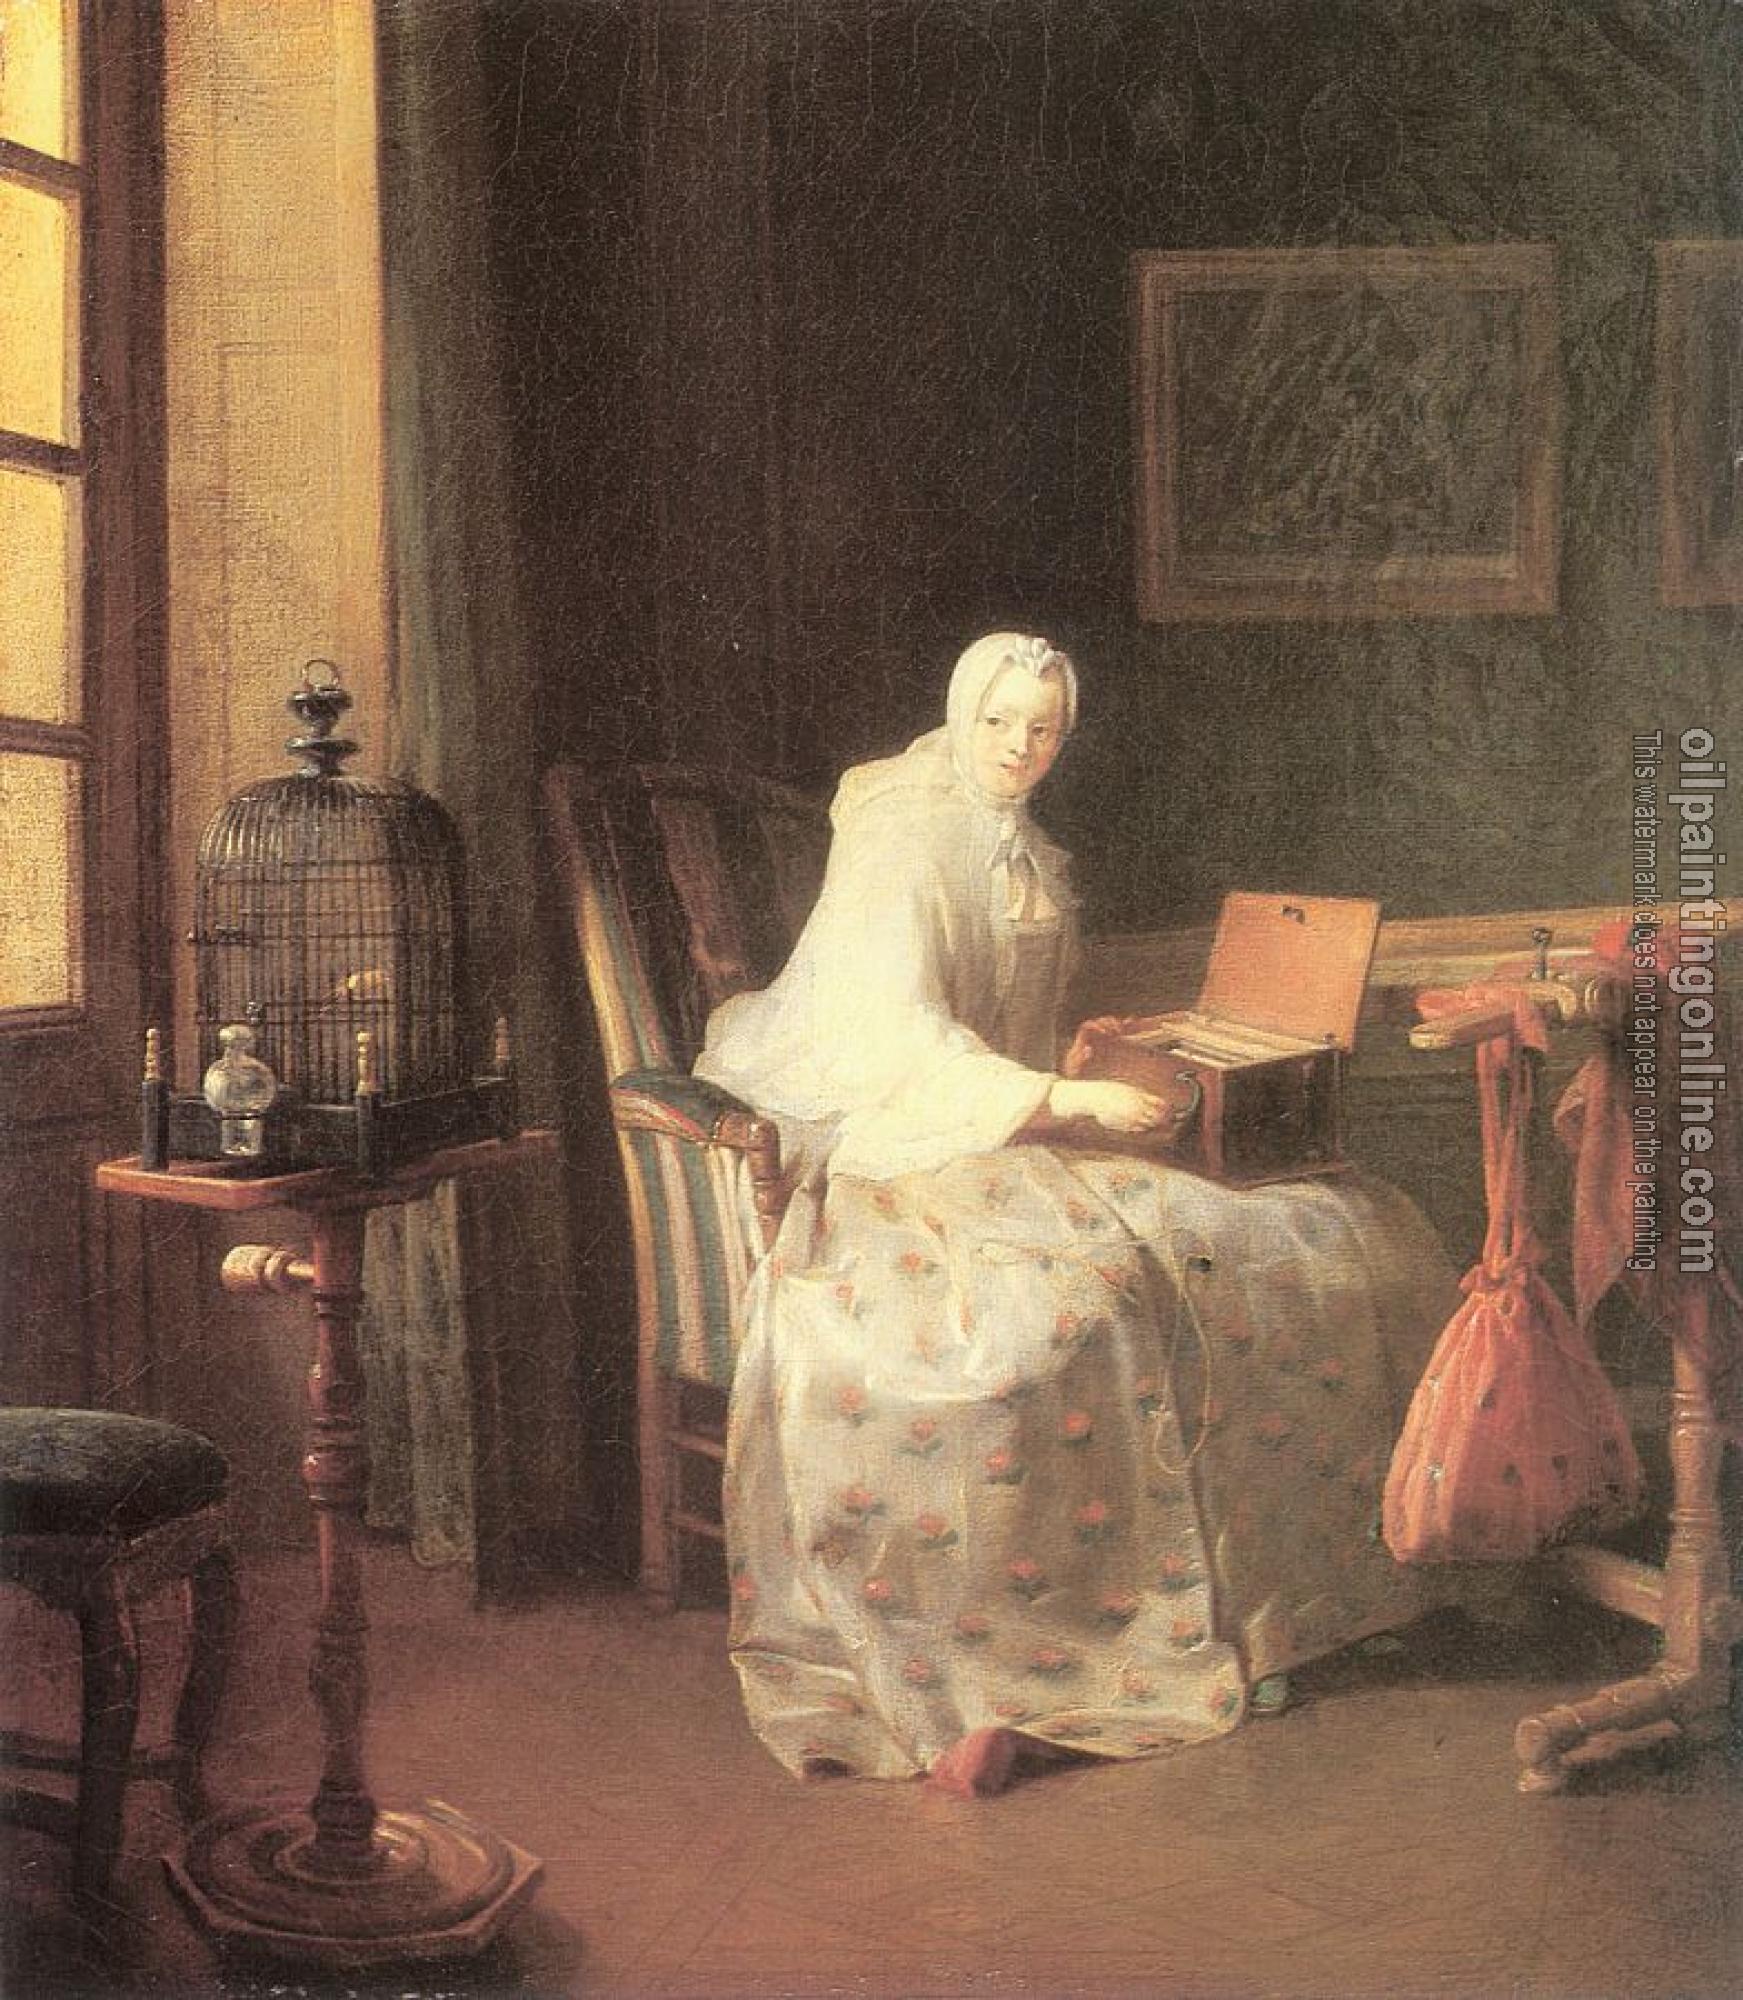 Chardin, Jean Baptiste Simeon - The Bird-Song Organ